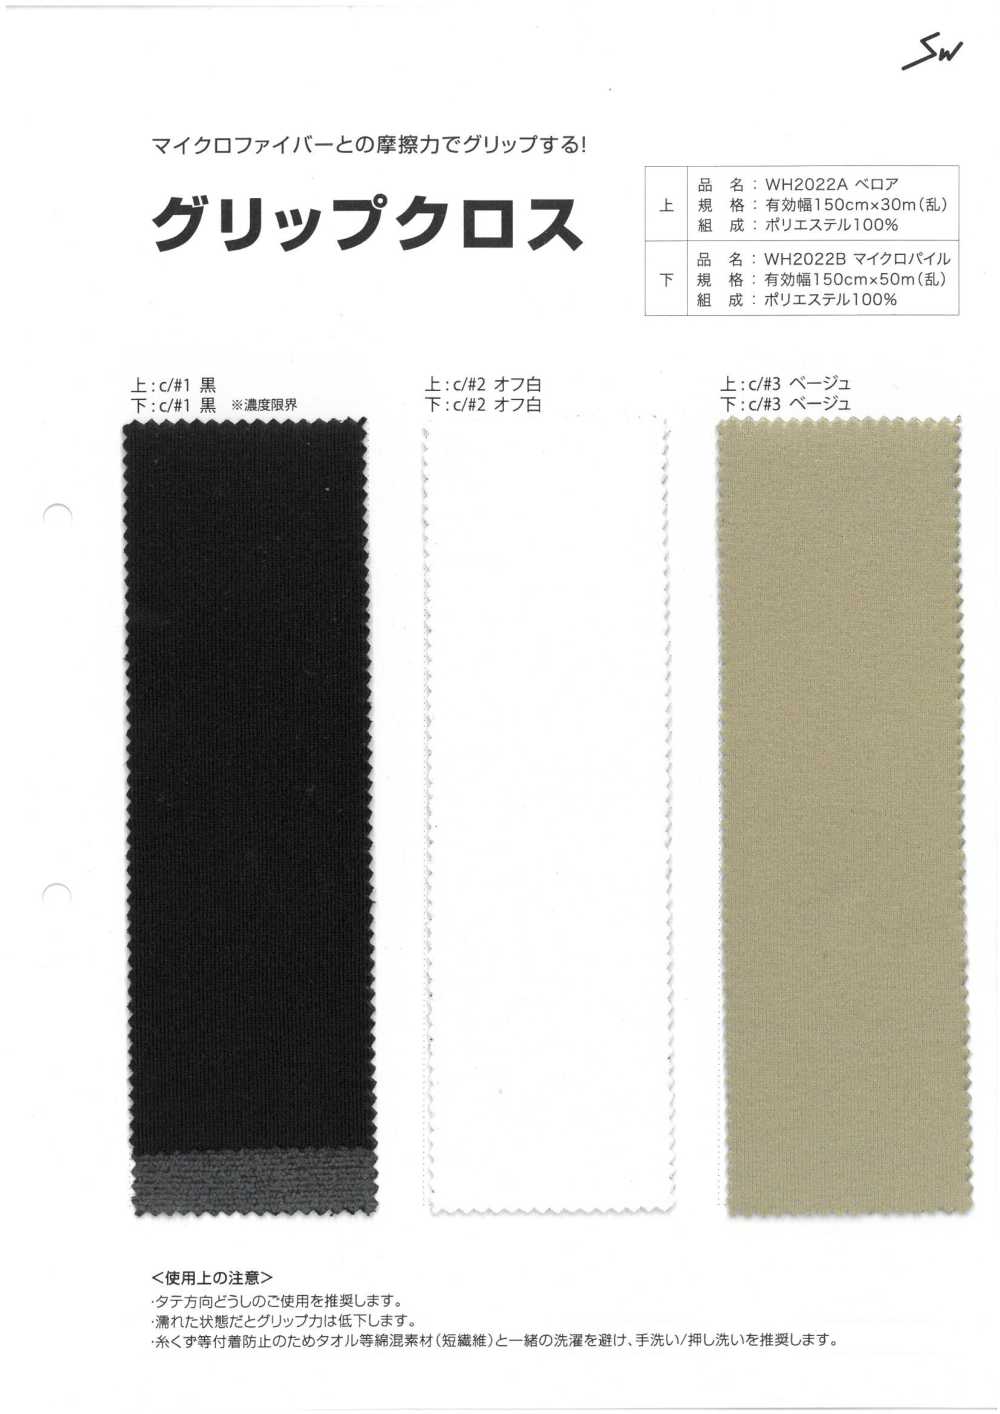 WH2022B Grip Cross B-Stapel[Textilgewebe] Sanwa Fasern